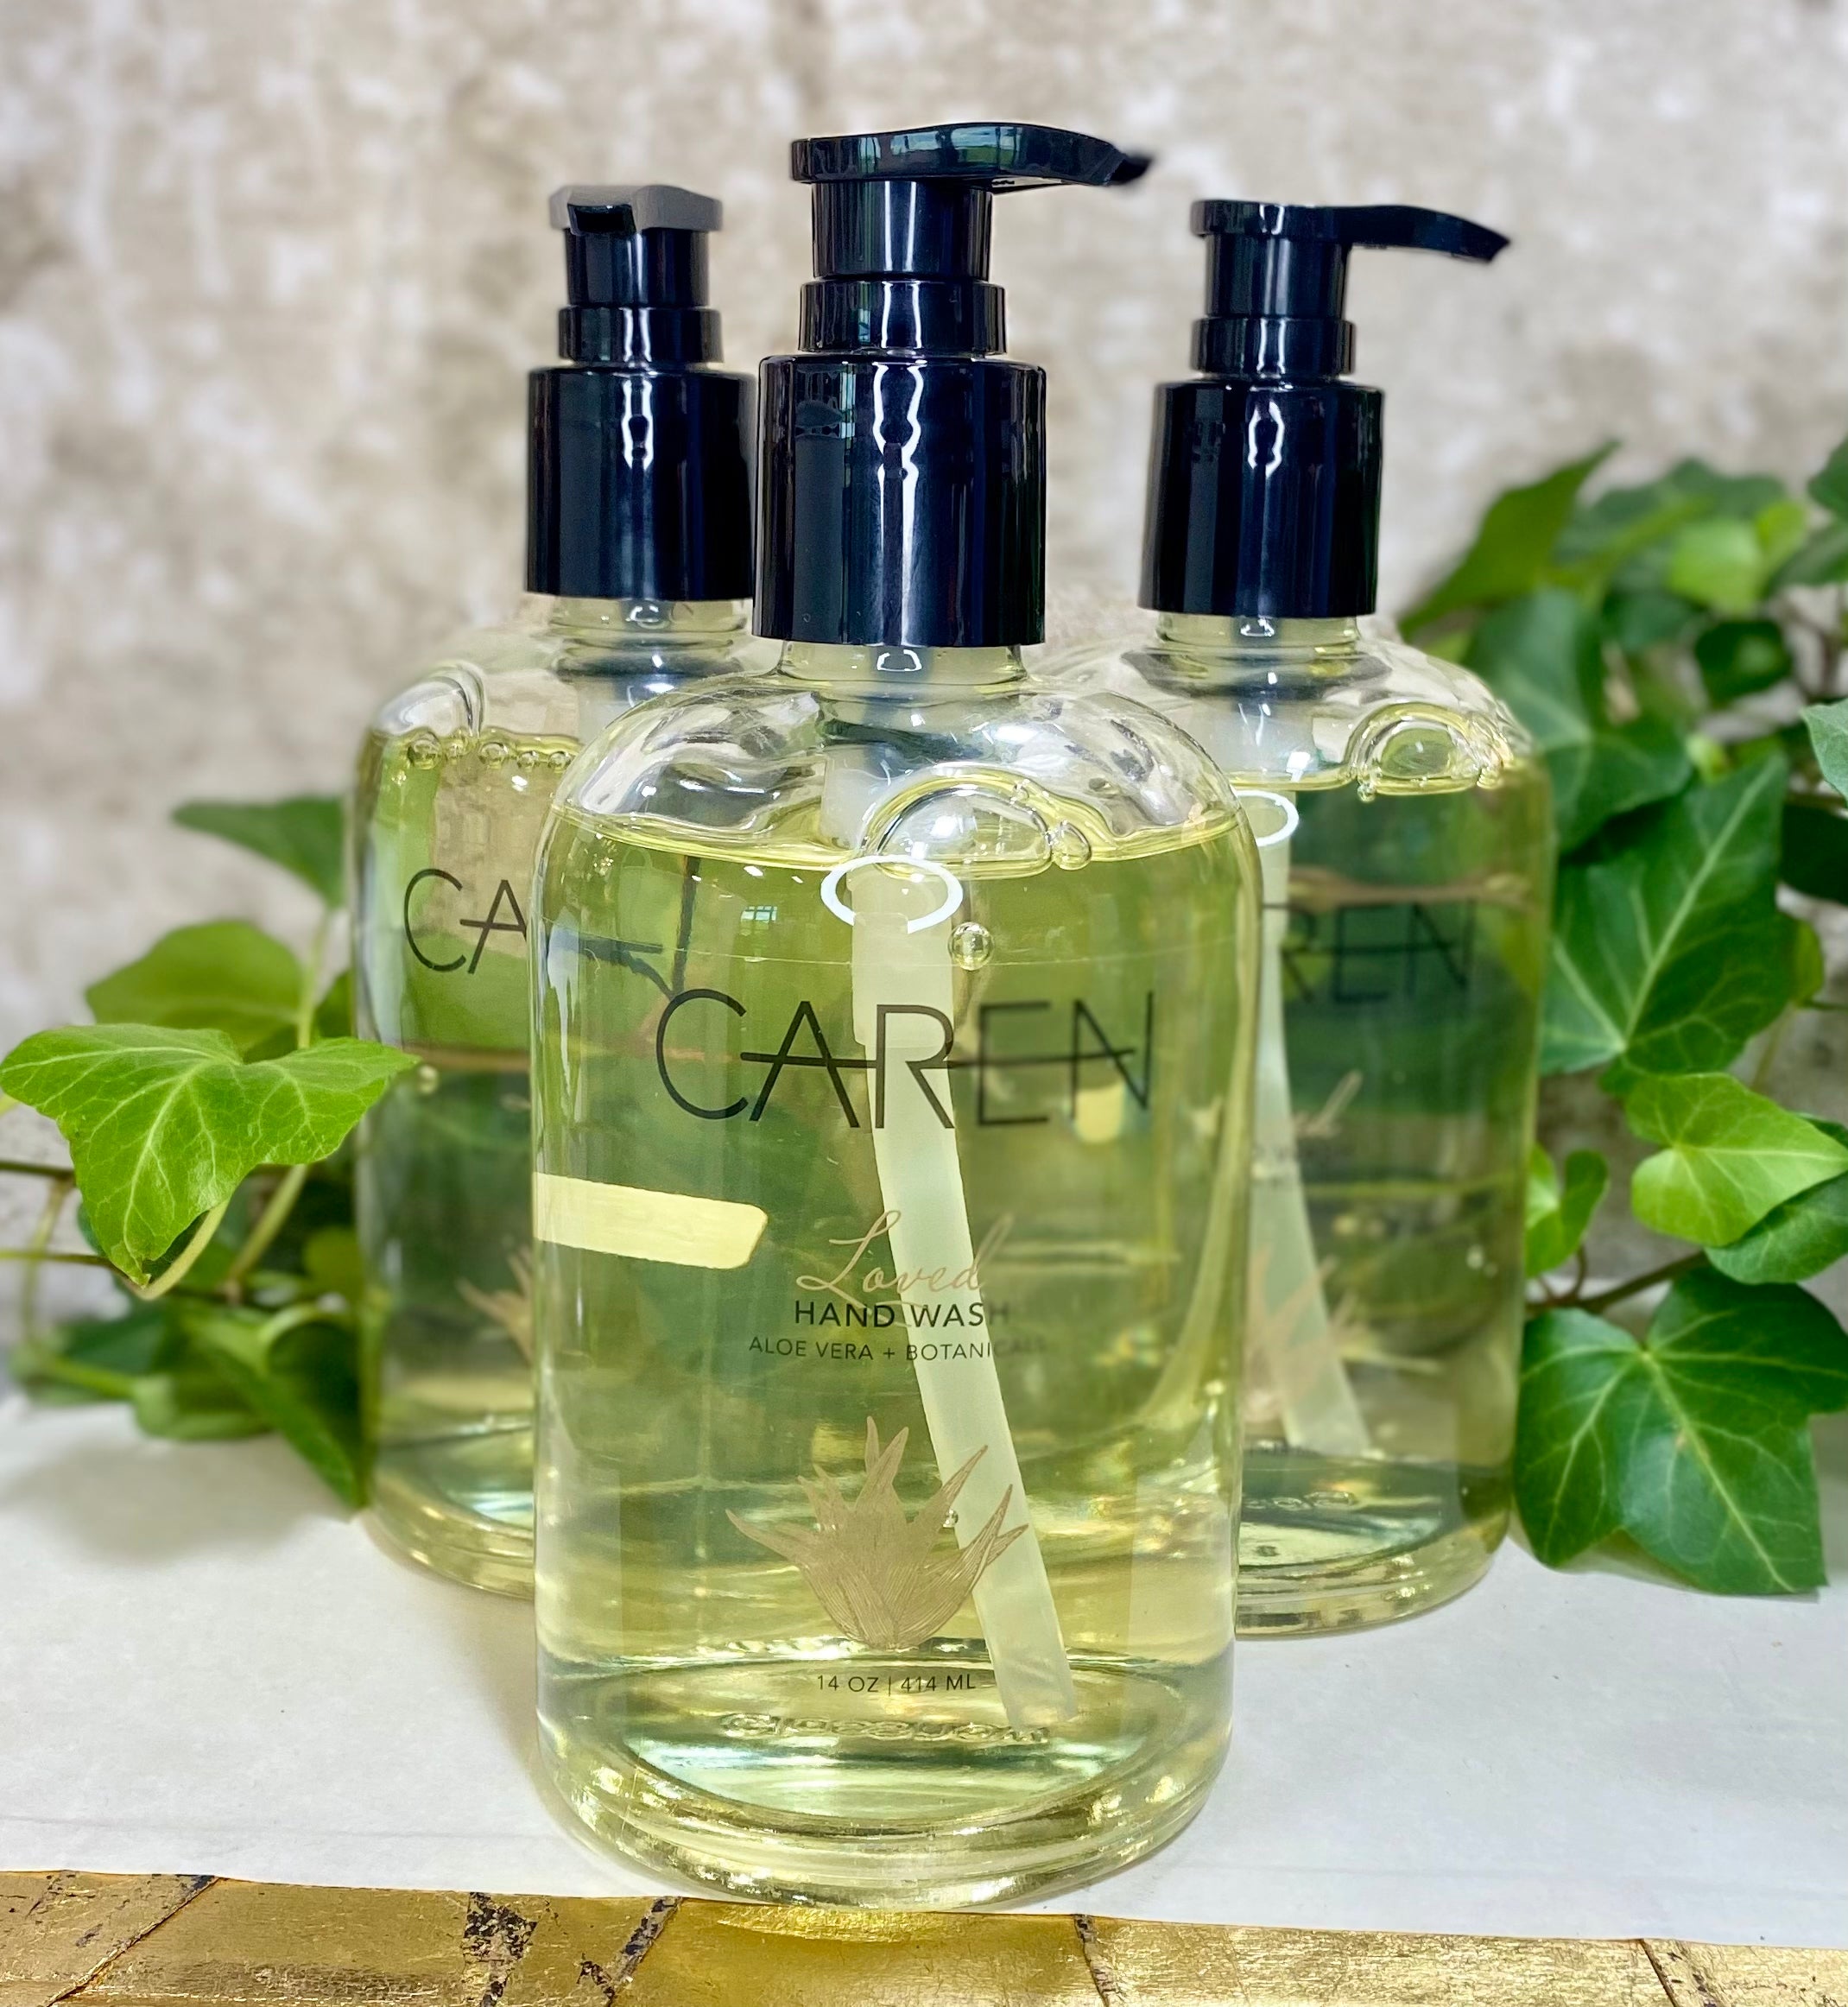 Caren “loved” hand soap